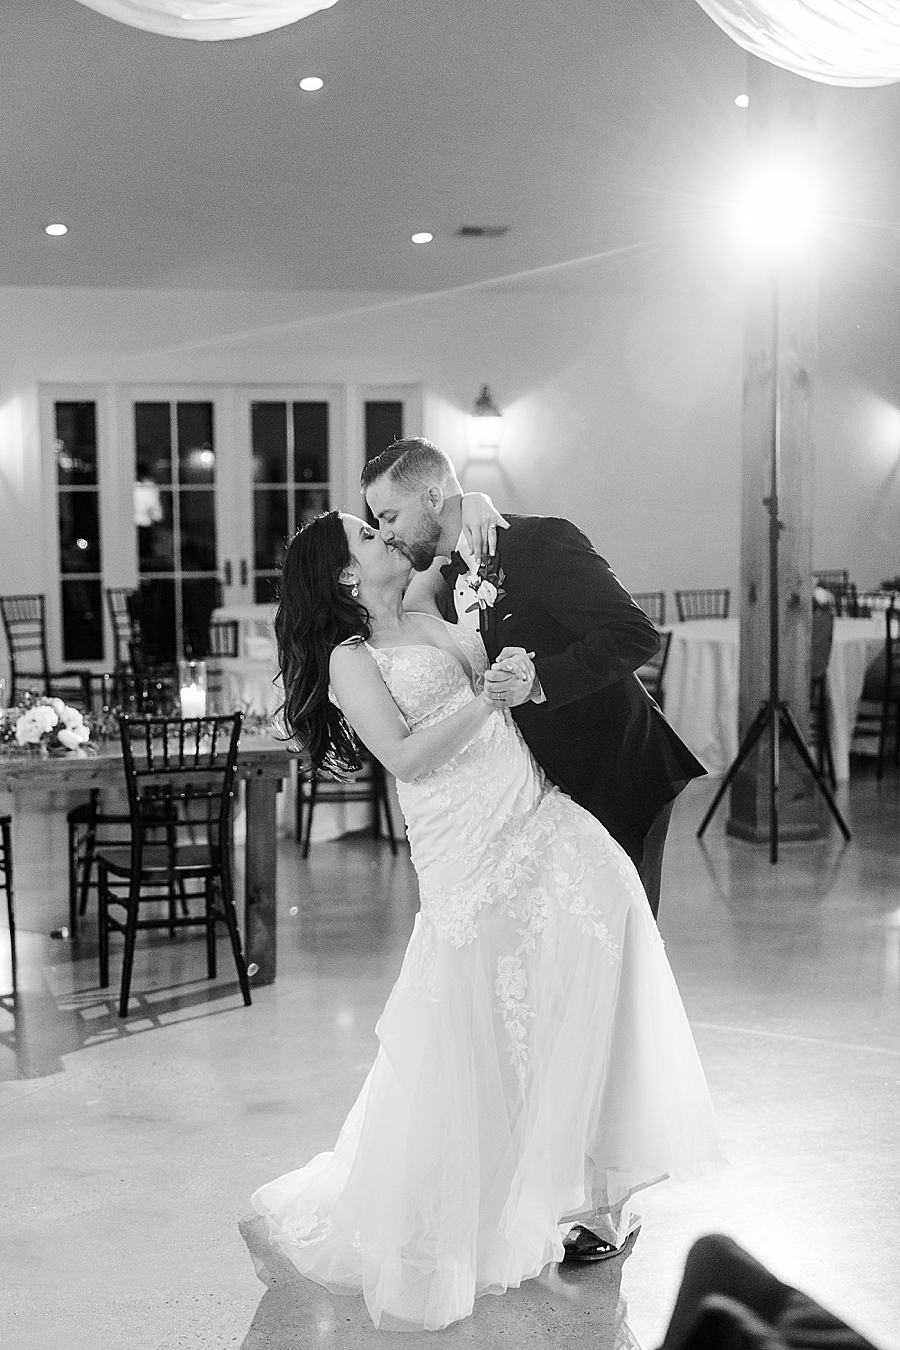 Bride and groom kiss on dance floor at wedding by Amanda May Photos